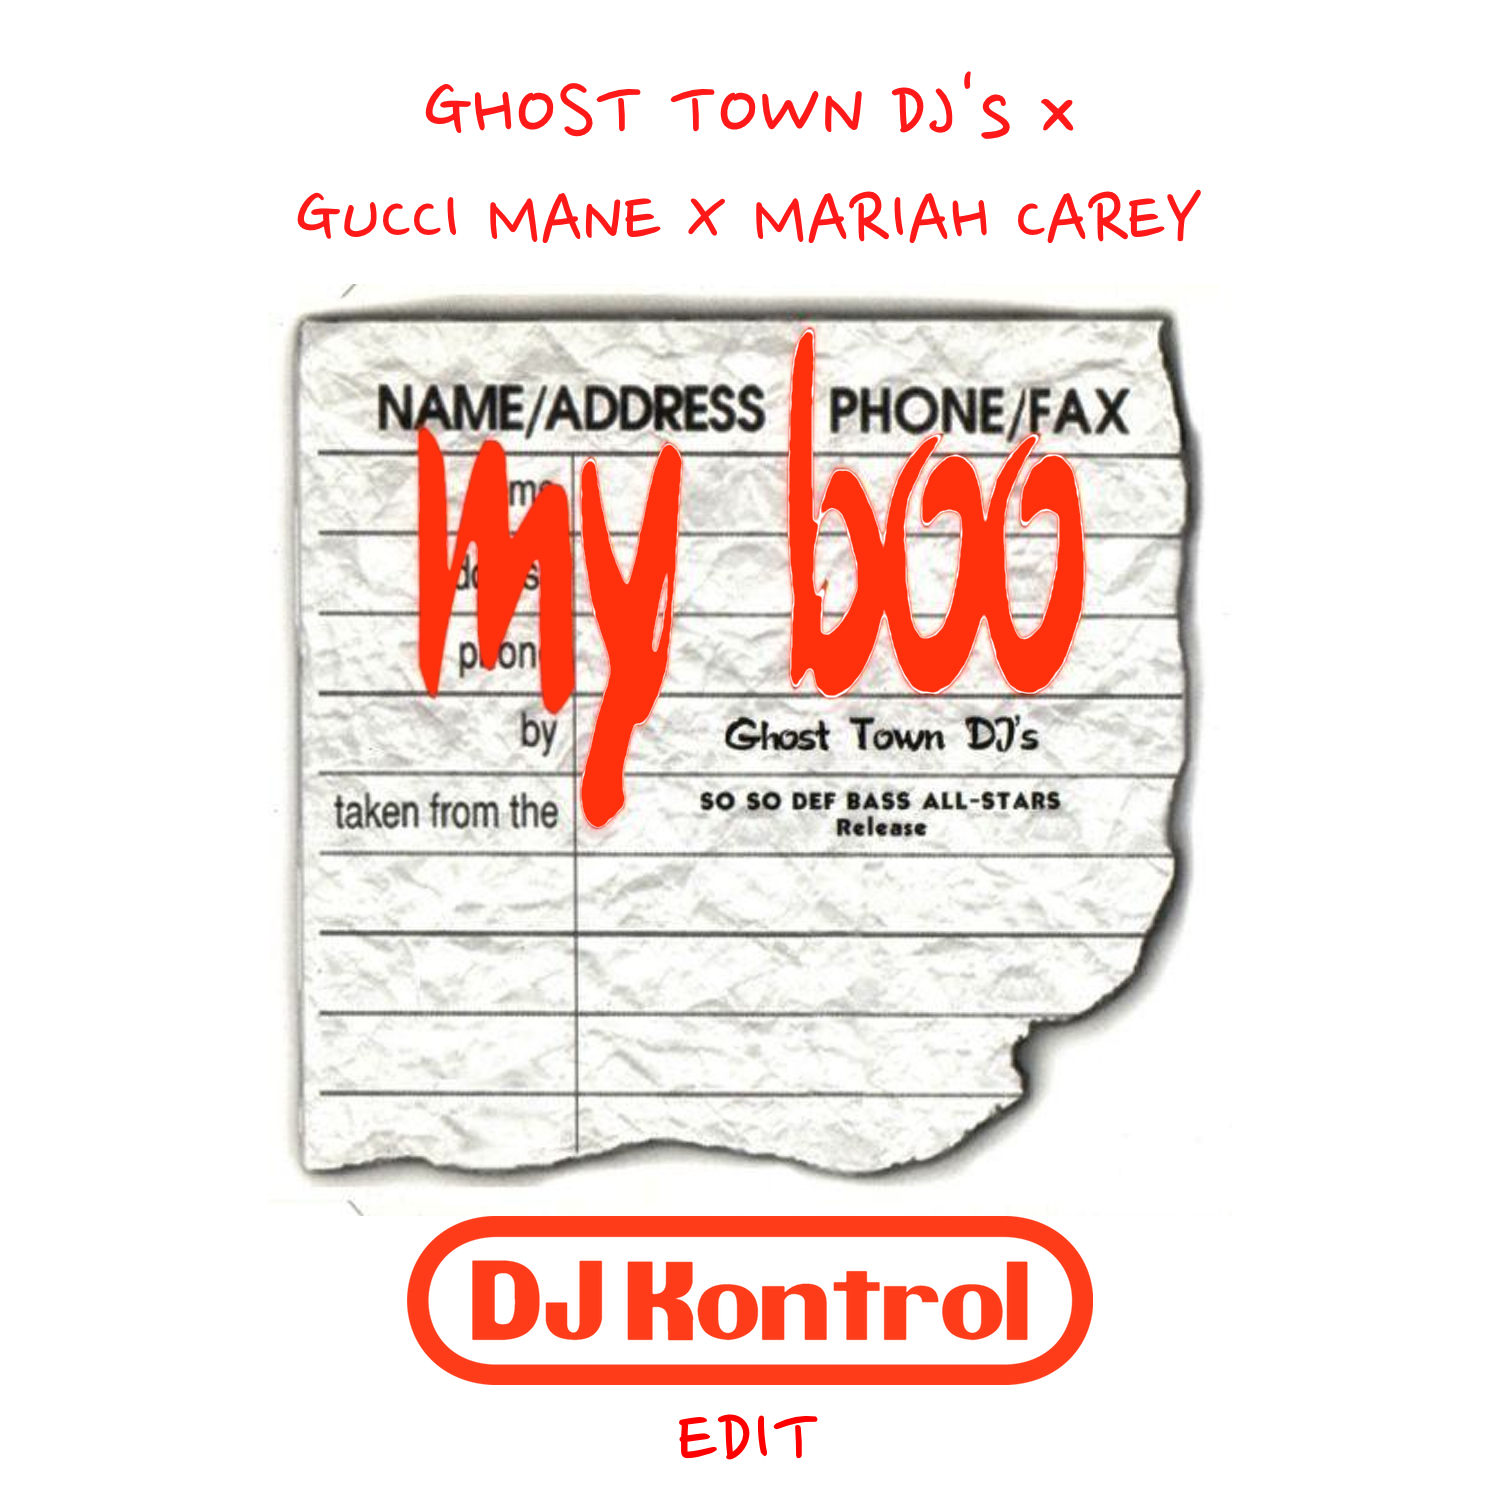 My Boo (DJ Kontrol Edit)